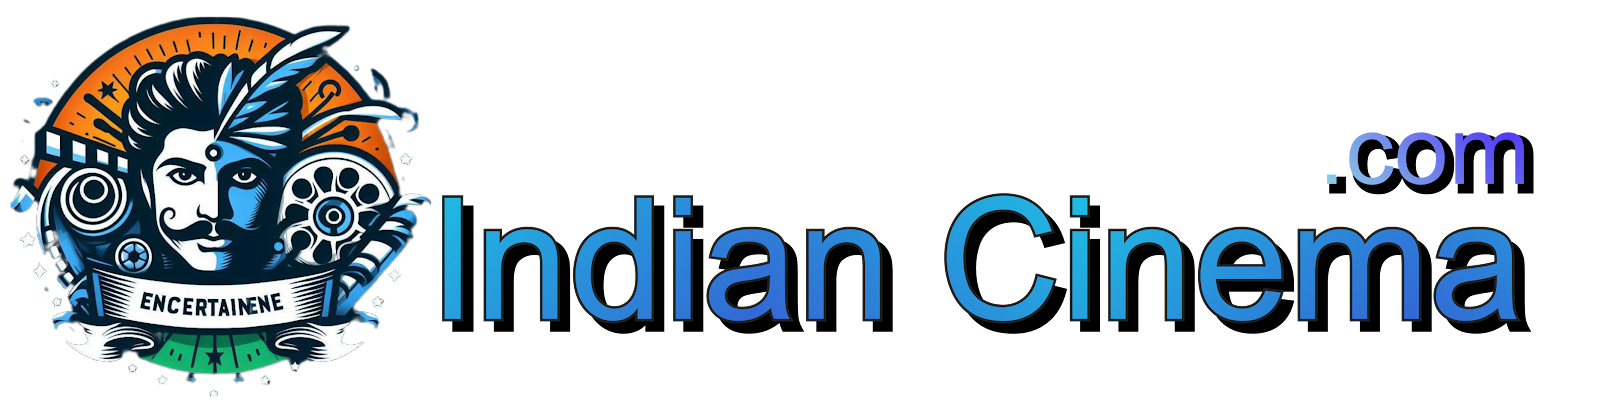 Indianscinema.com